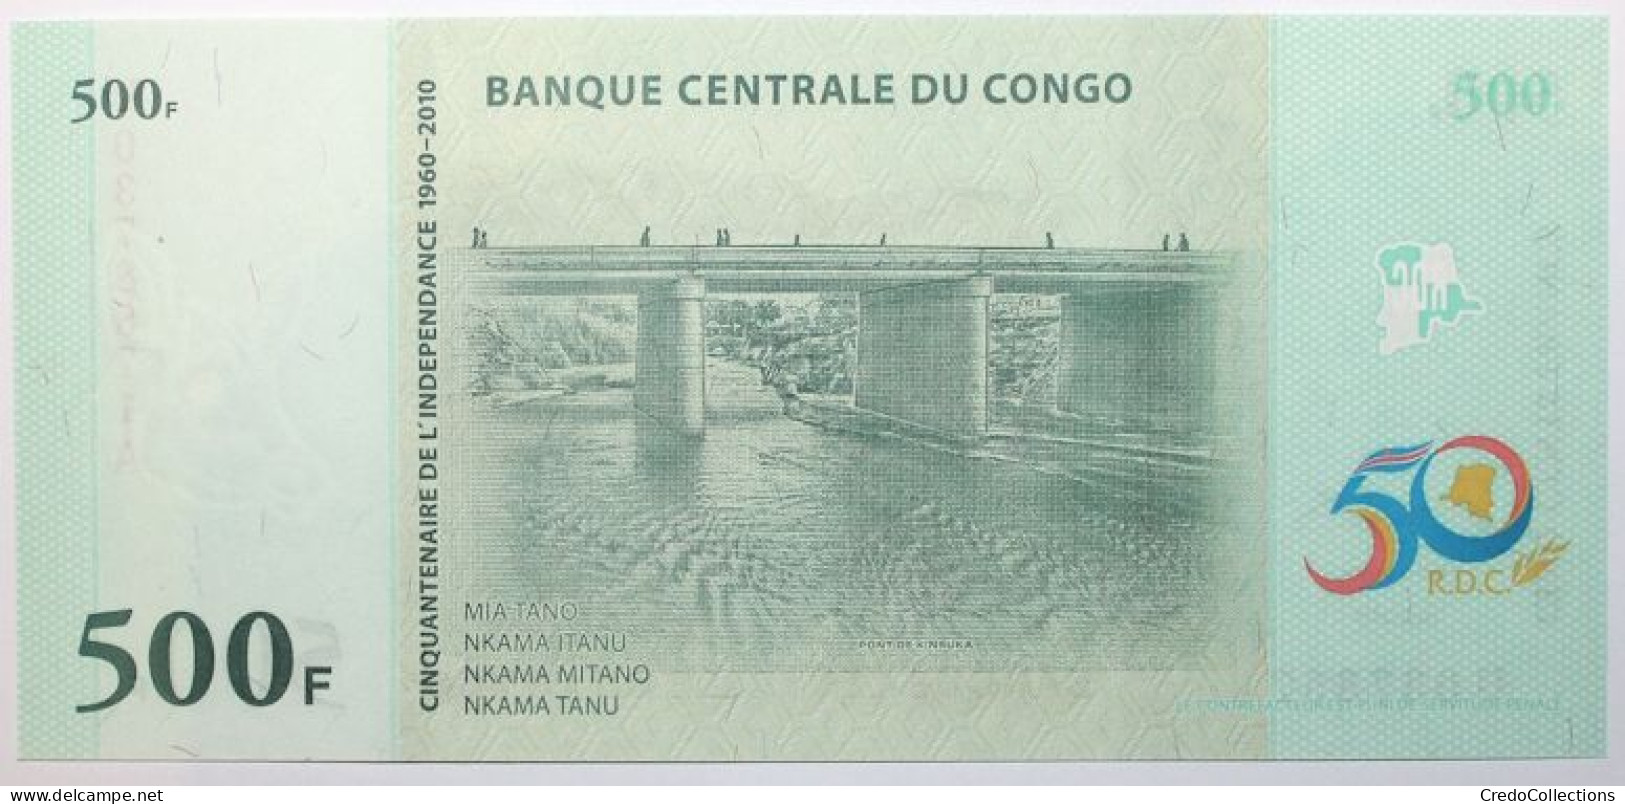 Congo (RD) - 500 Francs - 2010 - PICK 100a - NEUF - Democratic Republic Of The Congo & Zaire